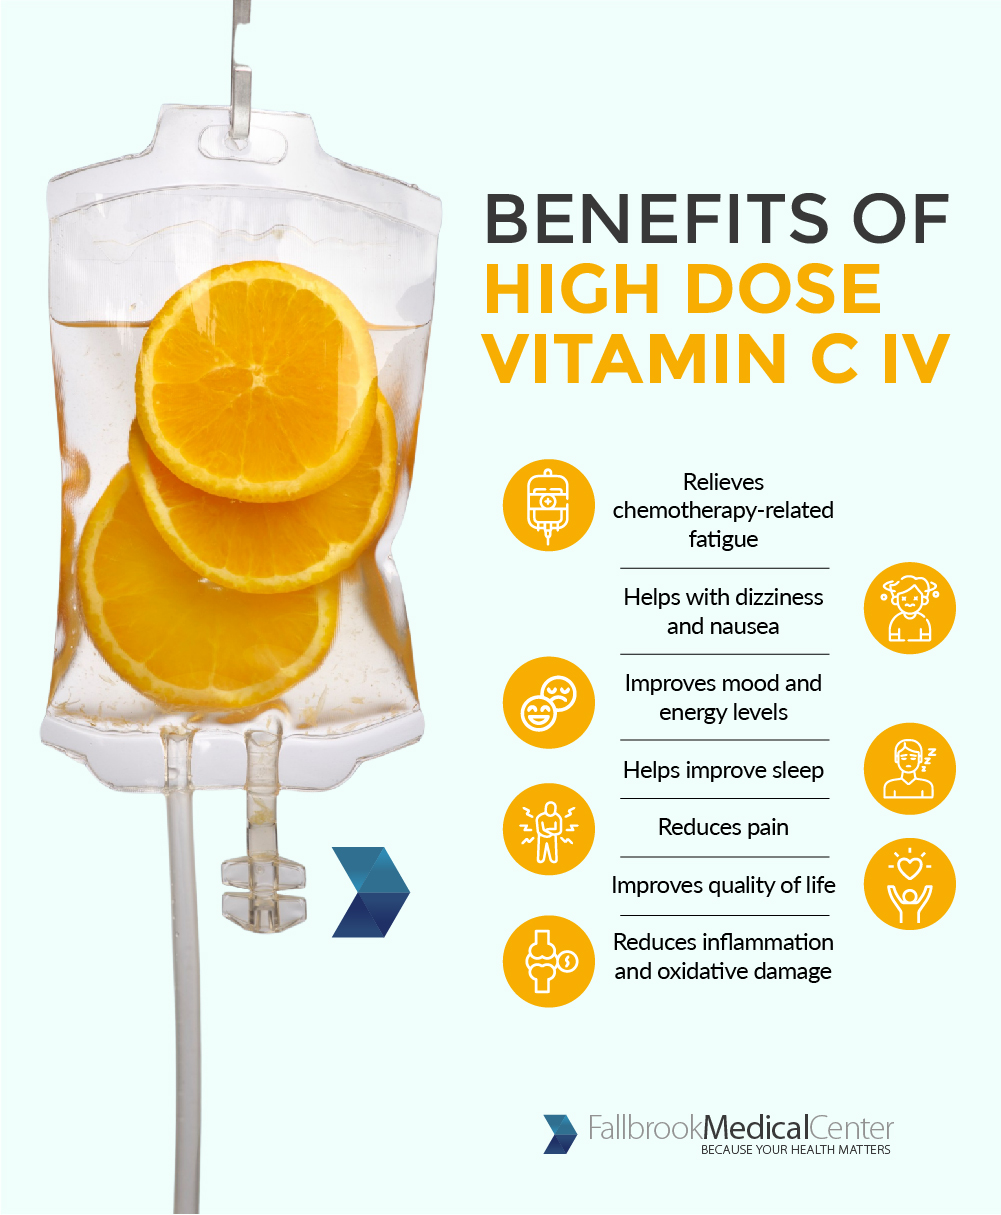 Benefits of High Dose Vitamin C IV